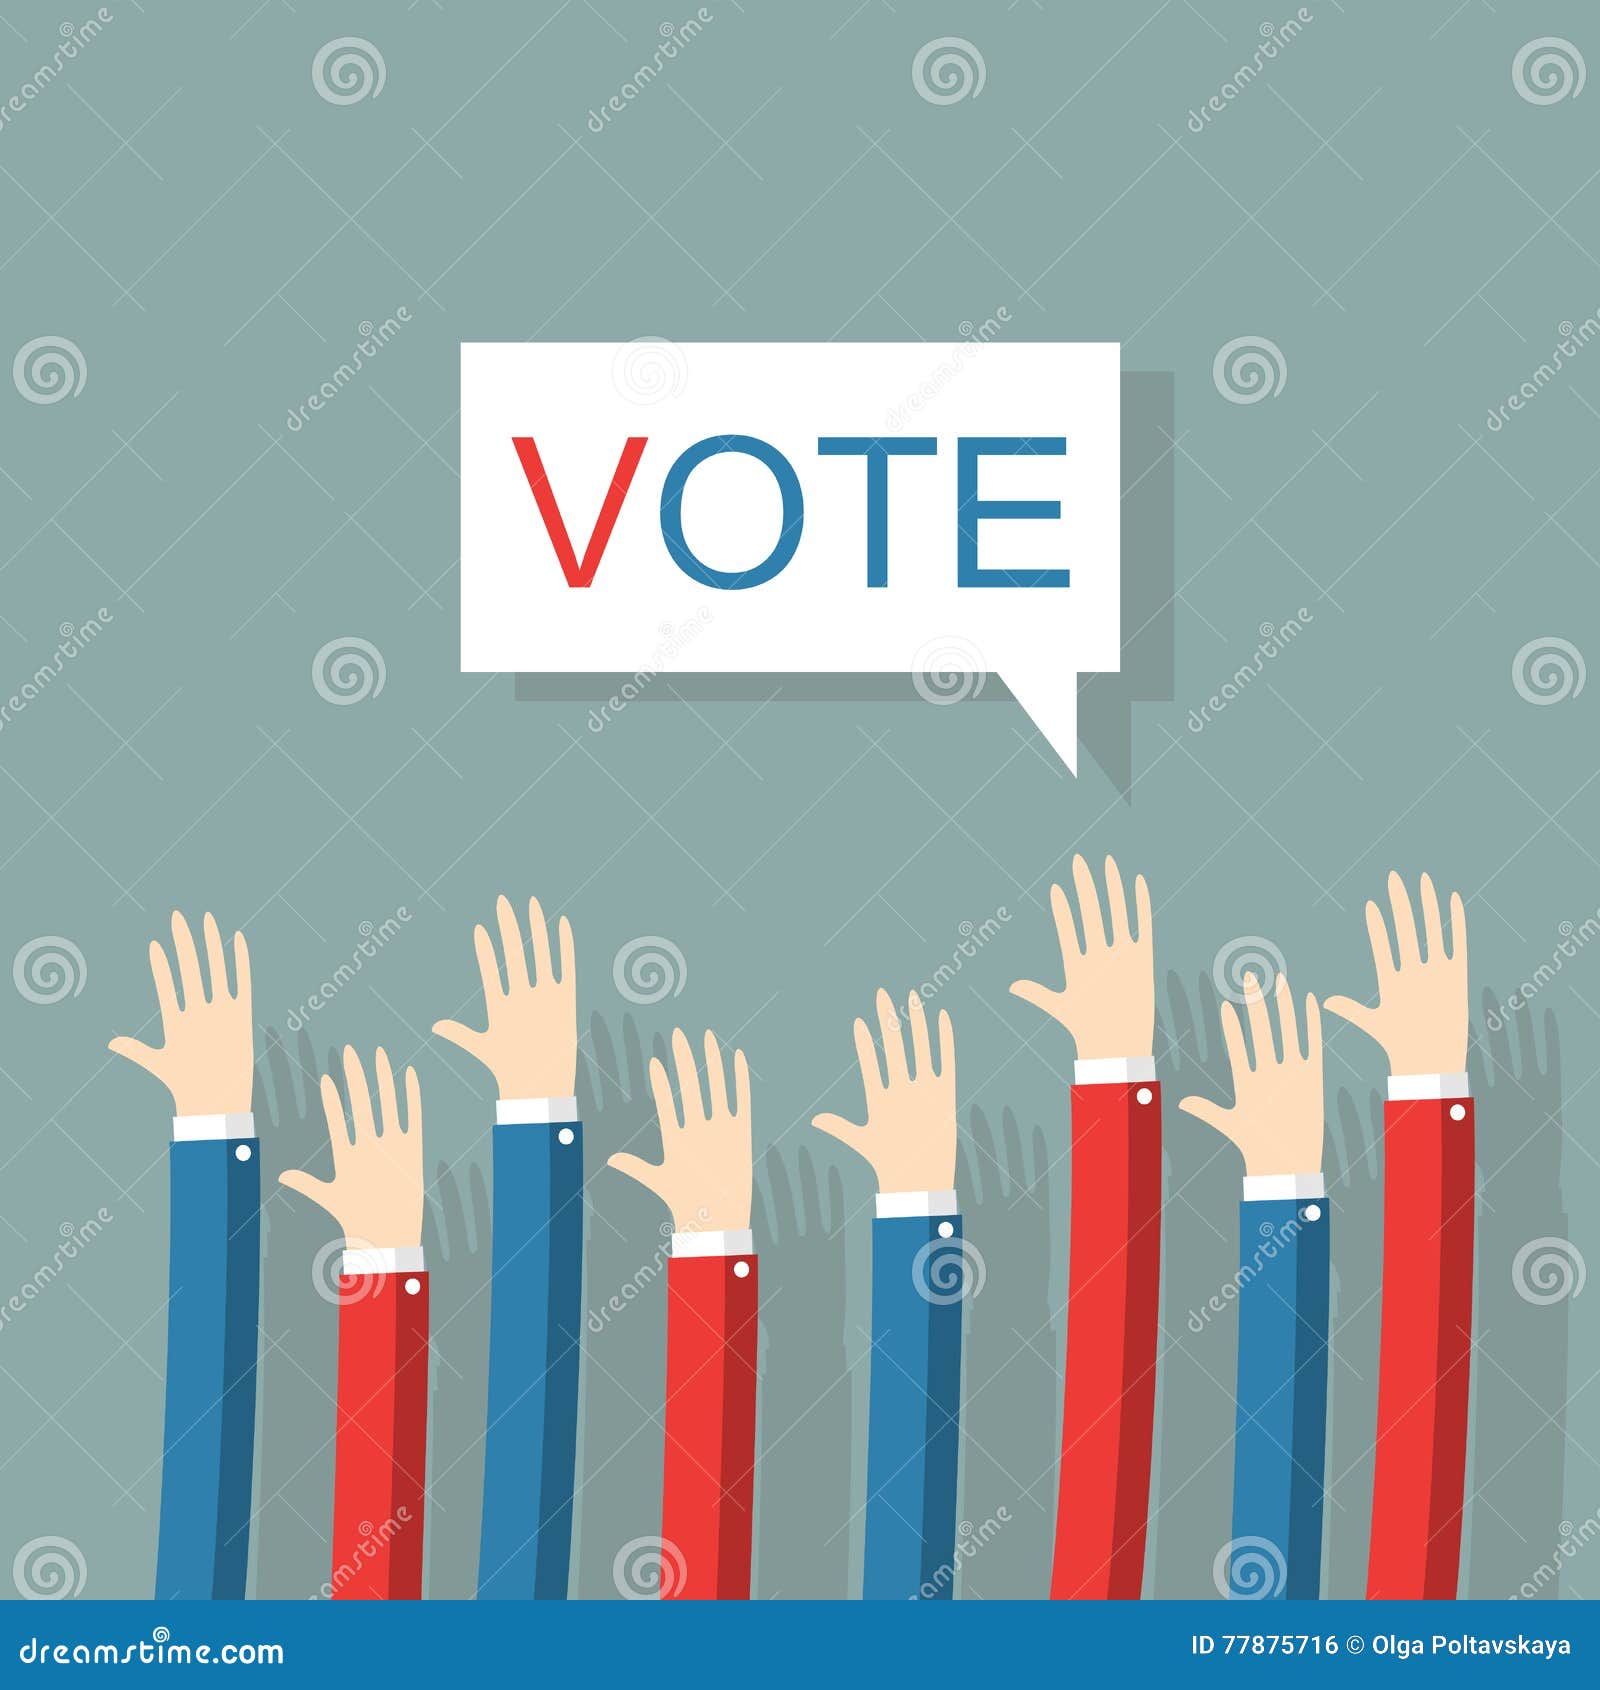 voting concept picture